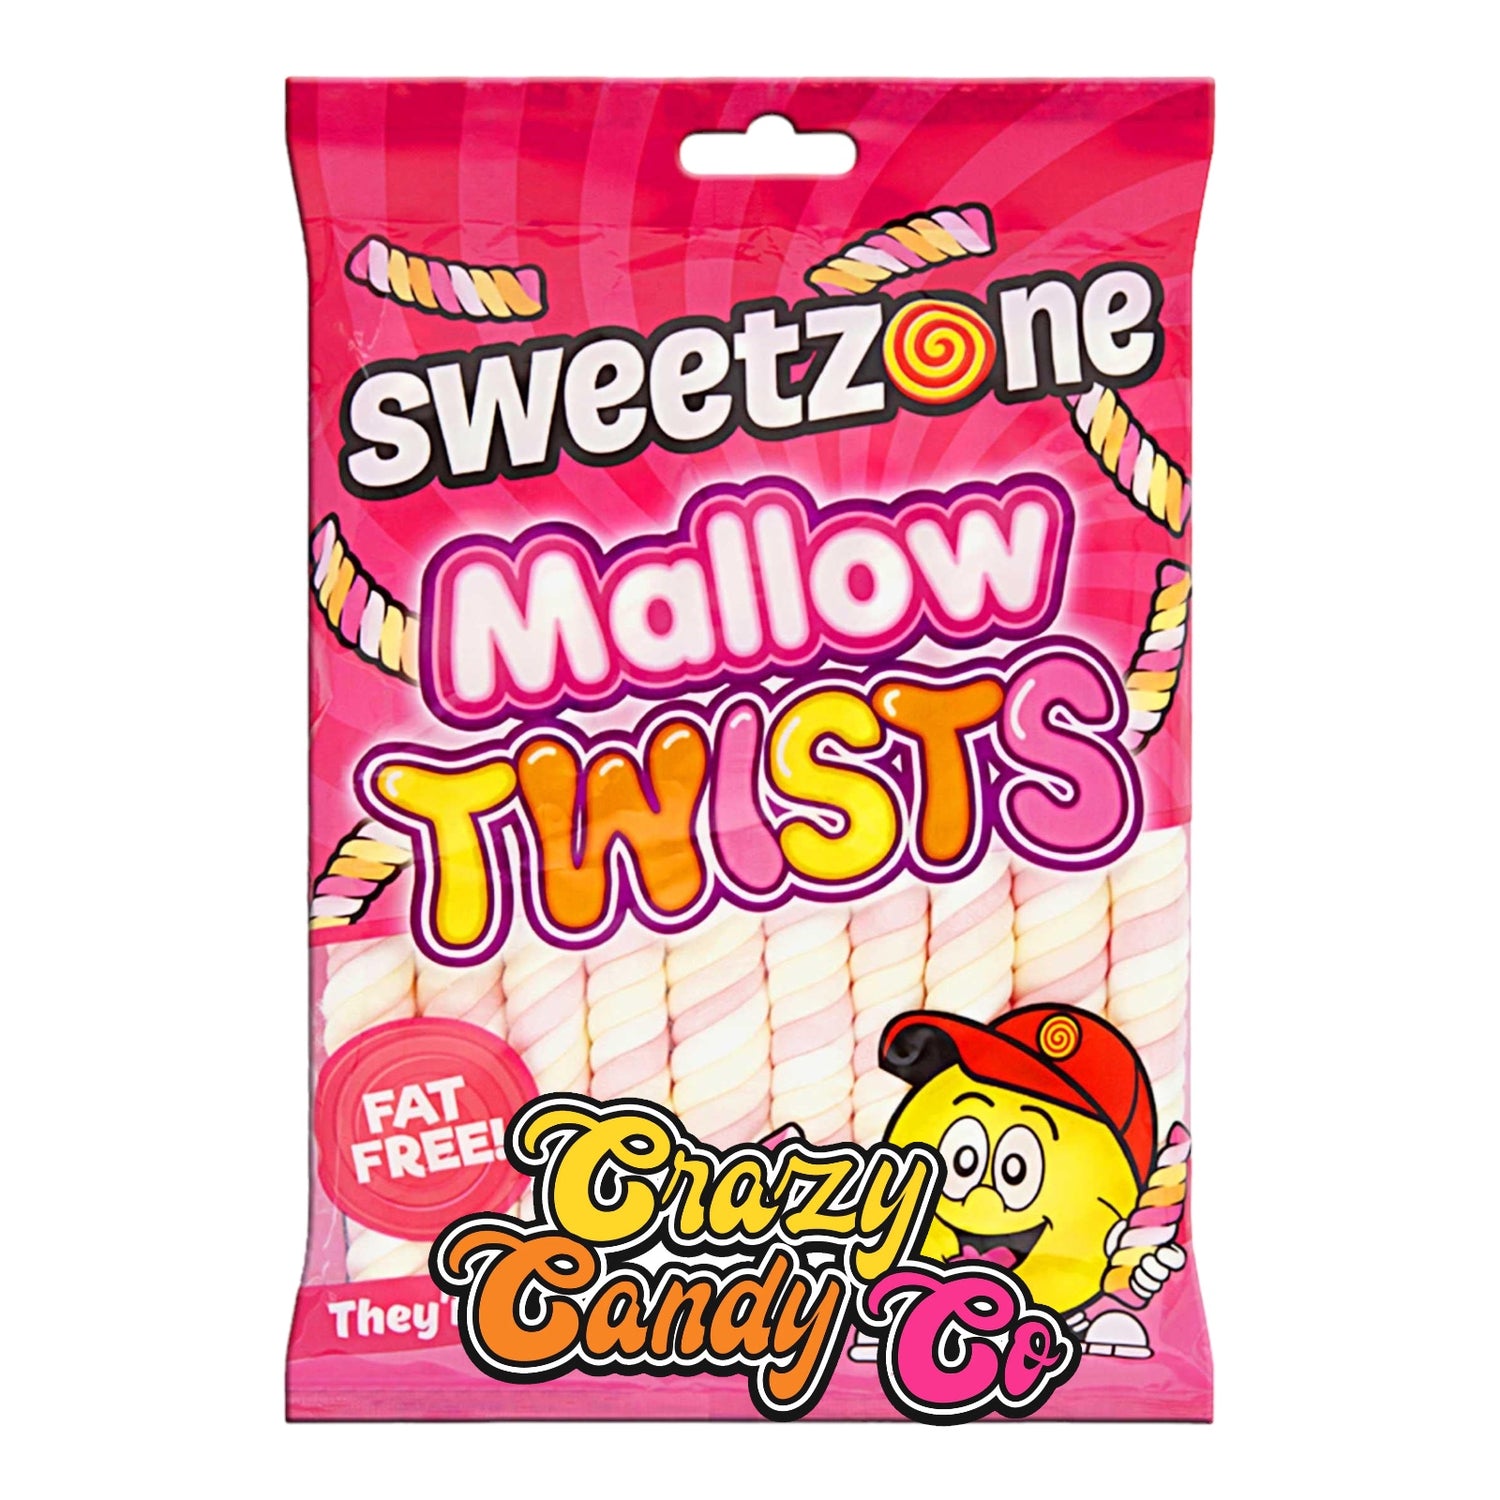 Sweetzone Marshmallow Twists 160g (Halal)